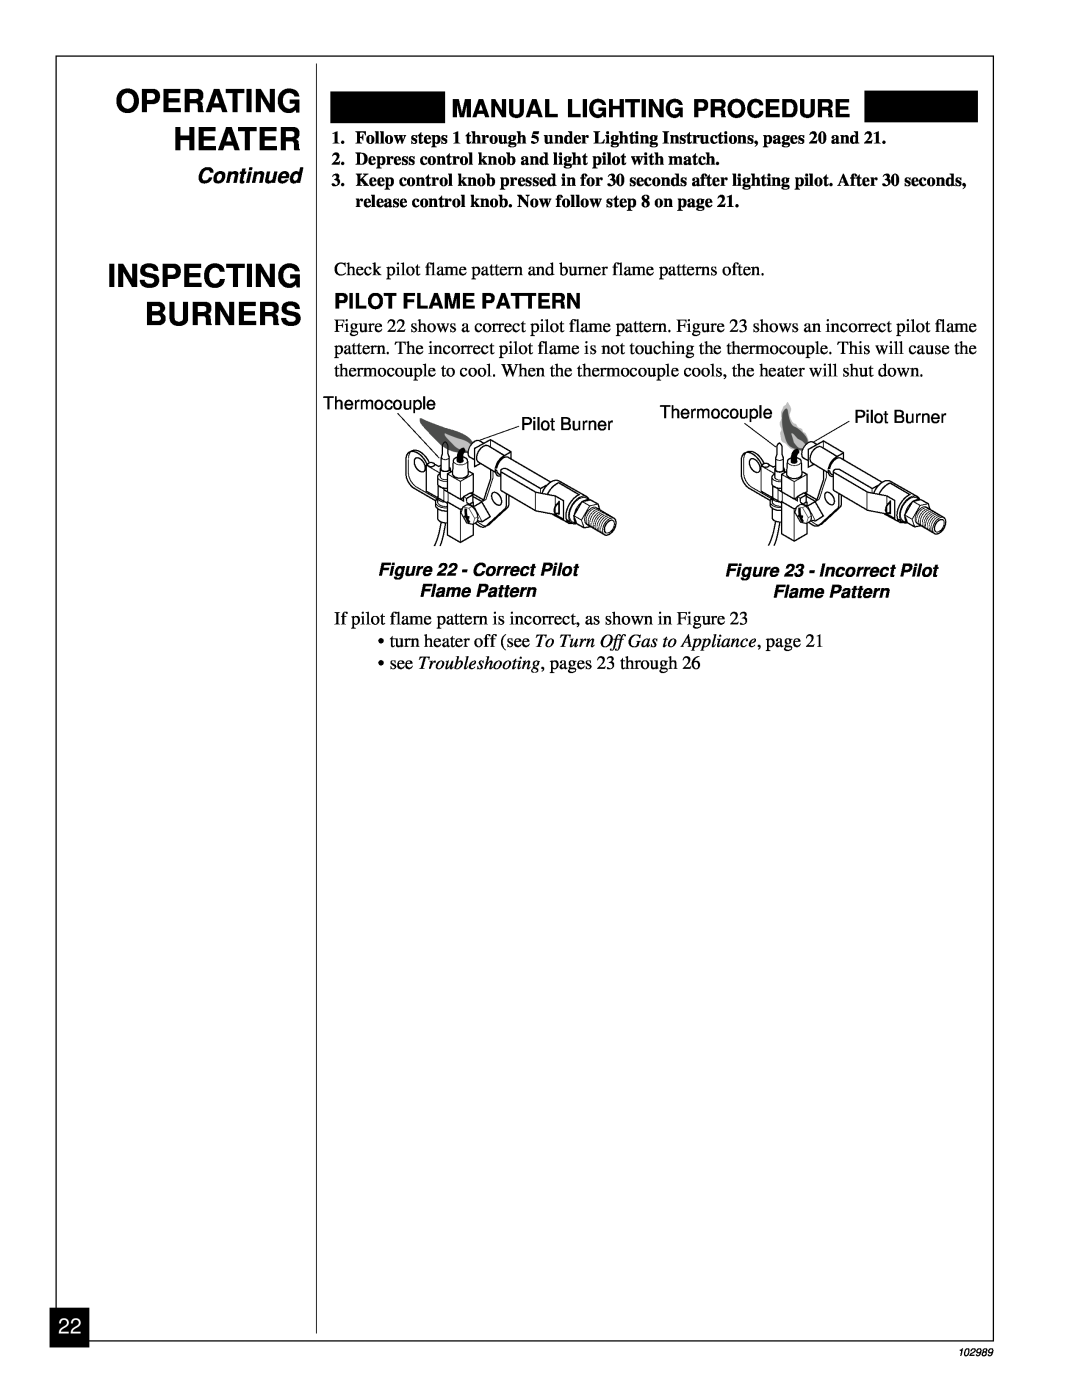 Desa CGS2718P installation manual Inspecting Burners, Operating Heater, Manual Lighting Procedure, Continued 